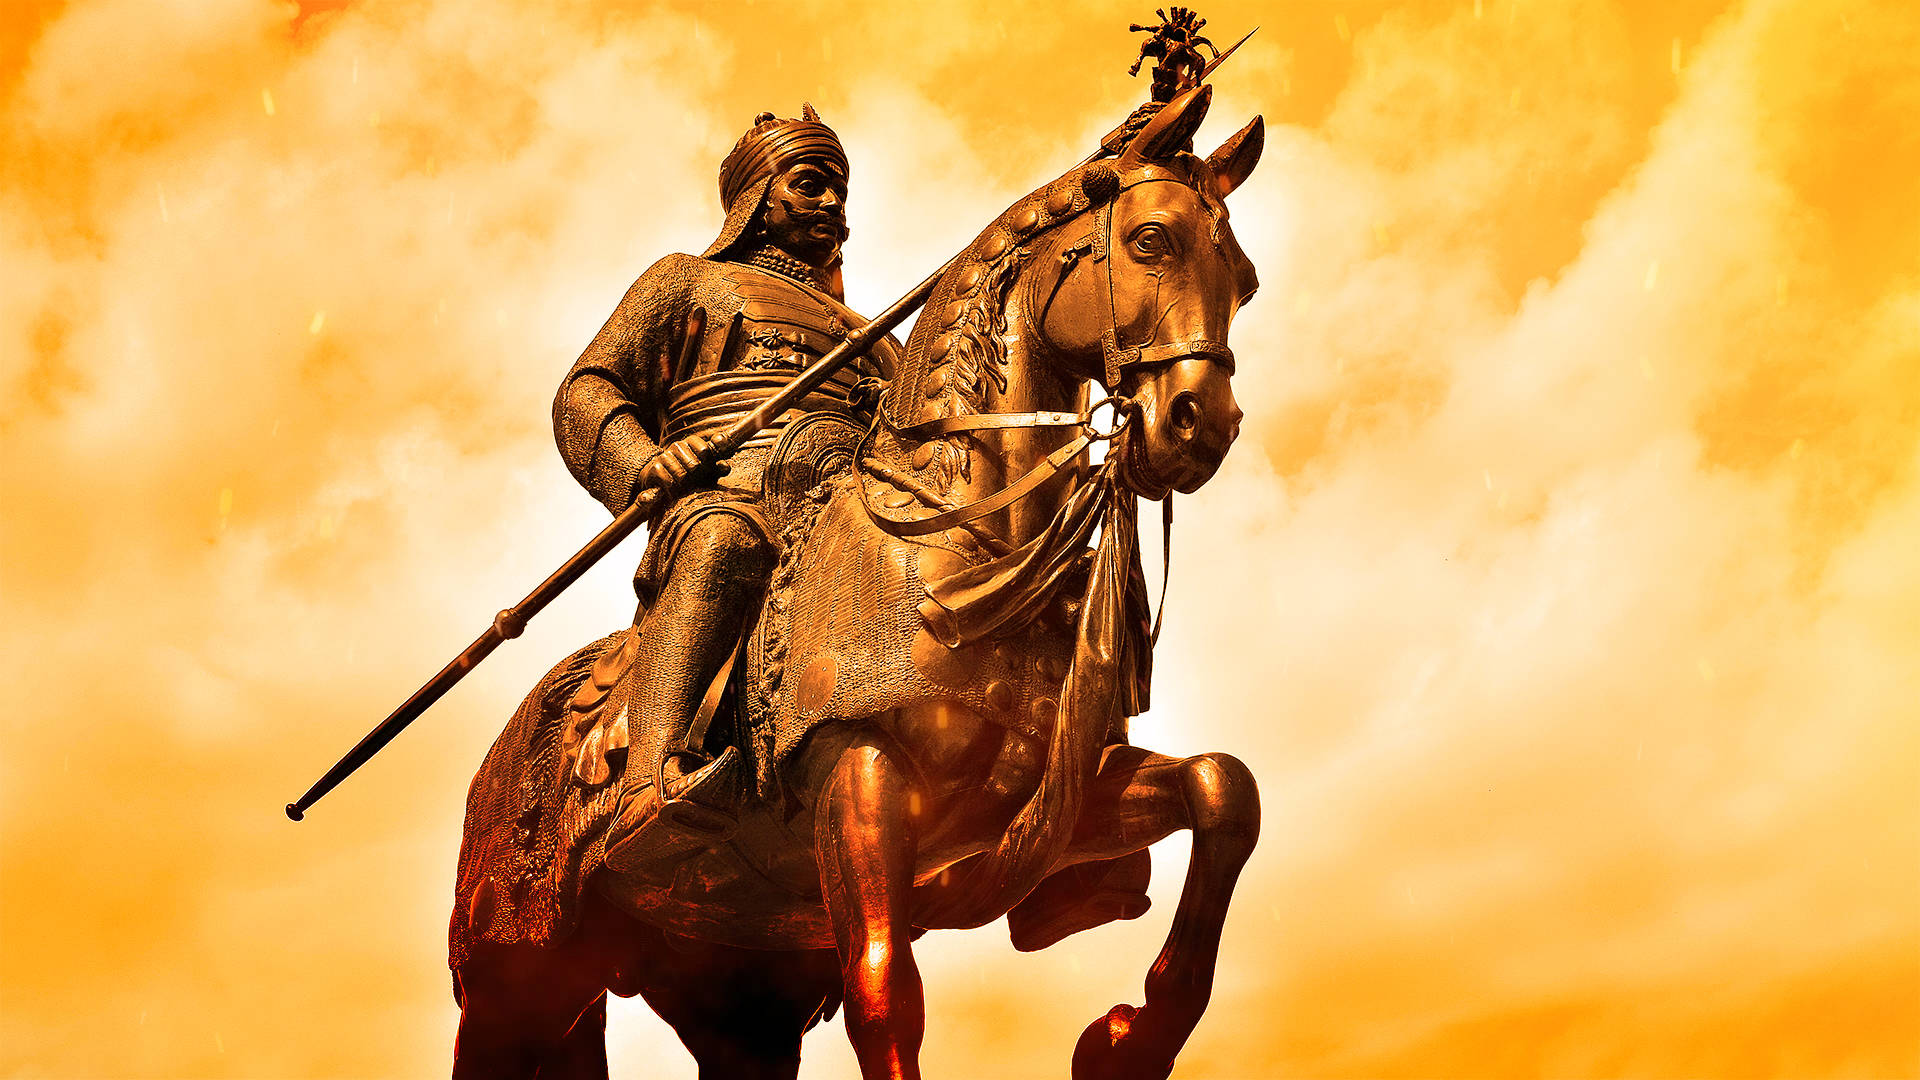 Kriegerischespferde-statuenbild Rajputana Hd Wallpaper